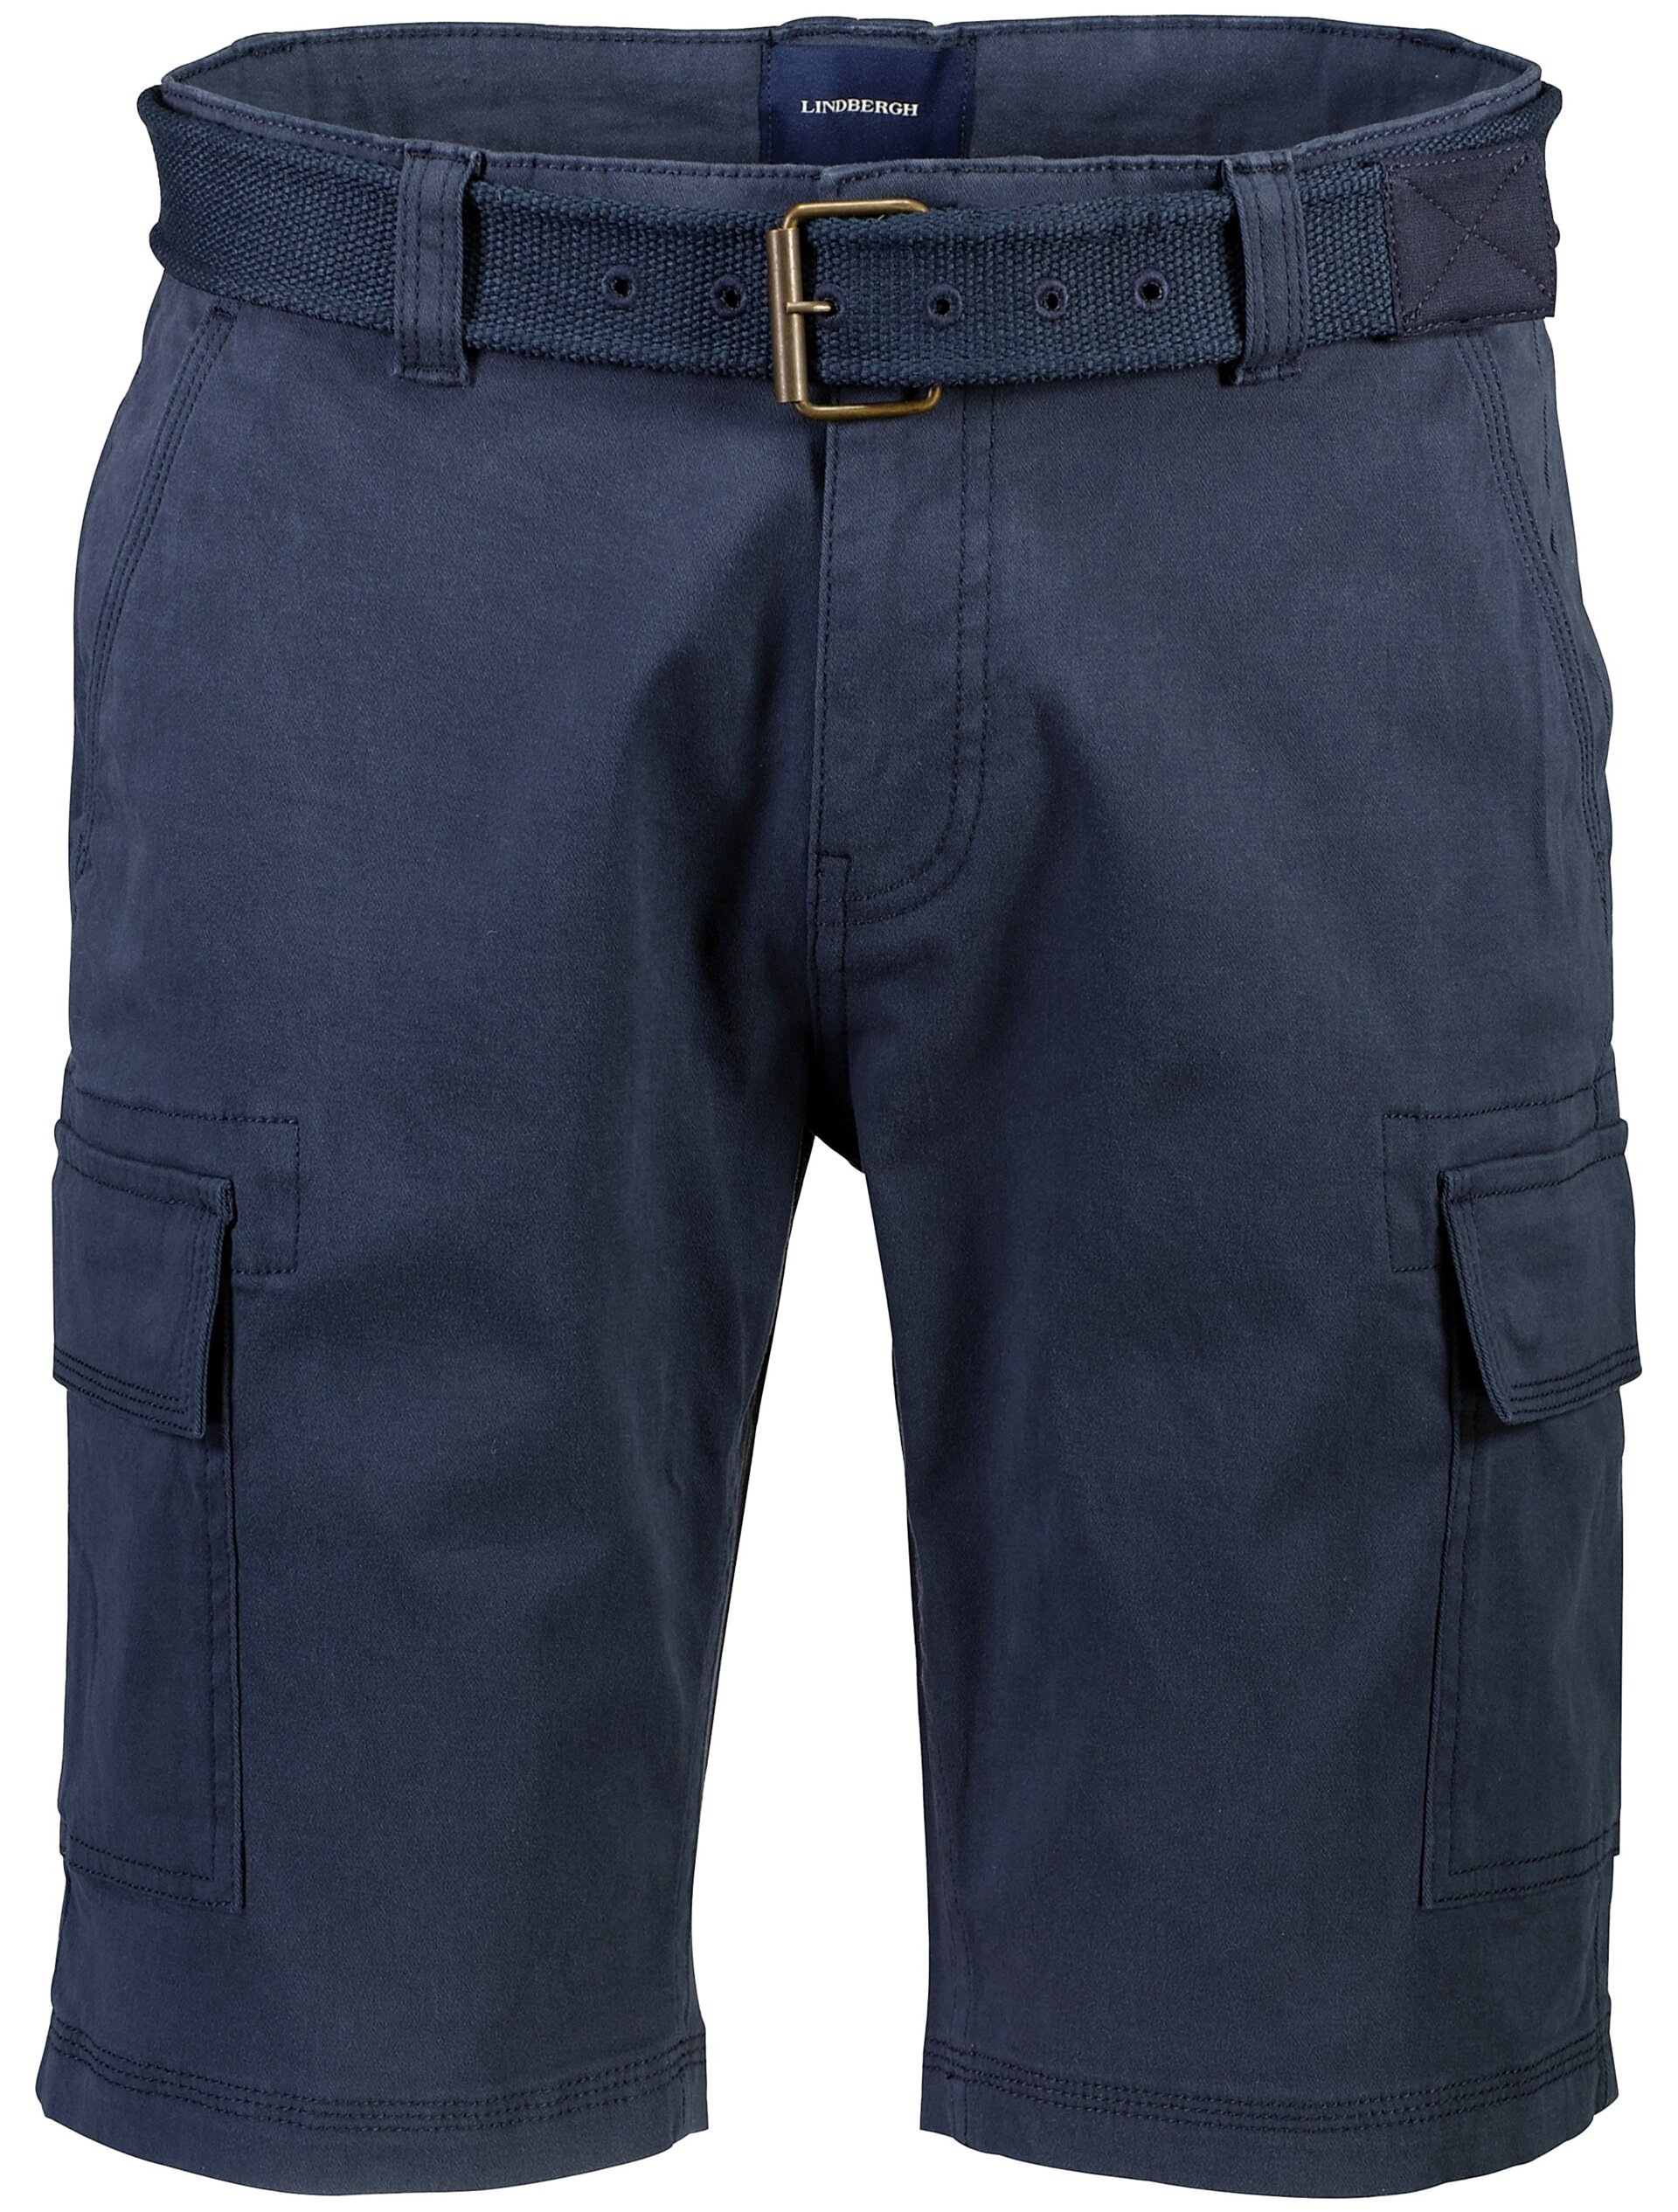 Lindbergh Cargo-Shorts blau / navy